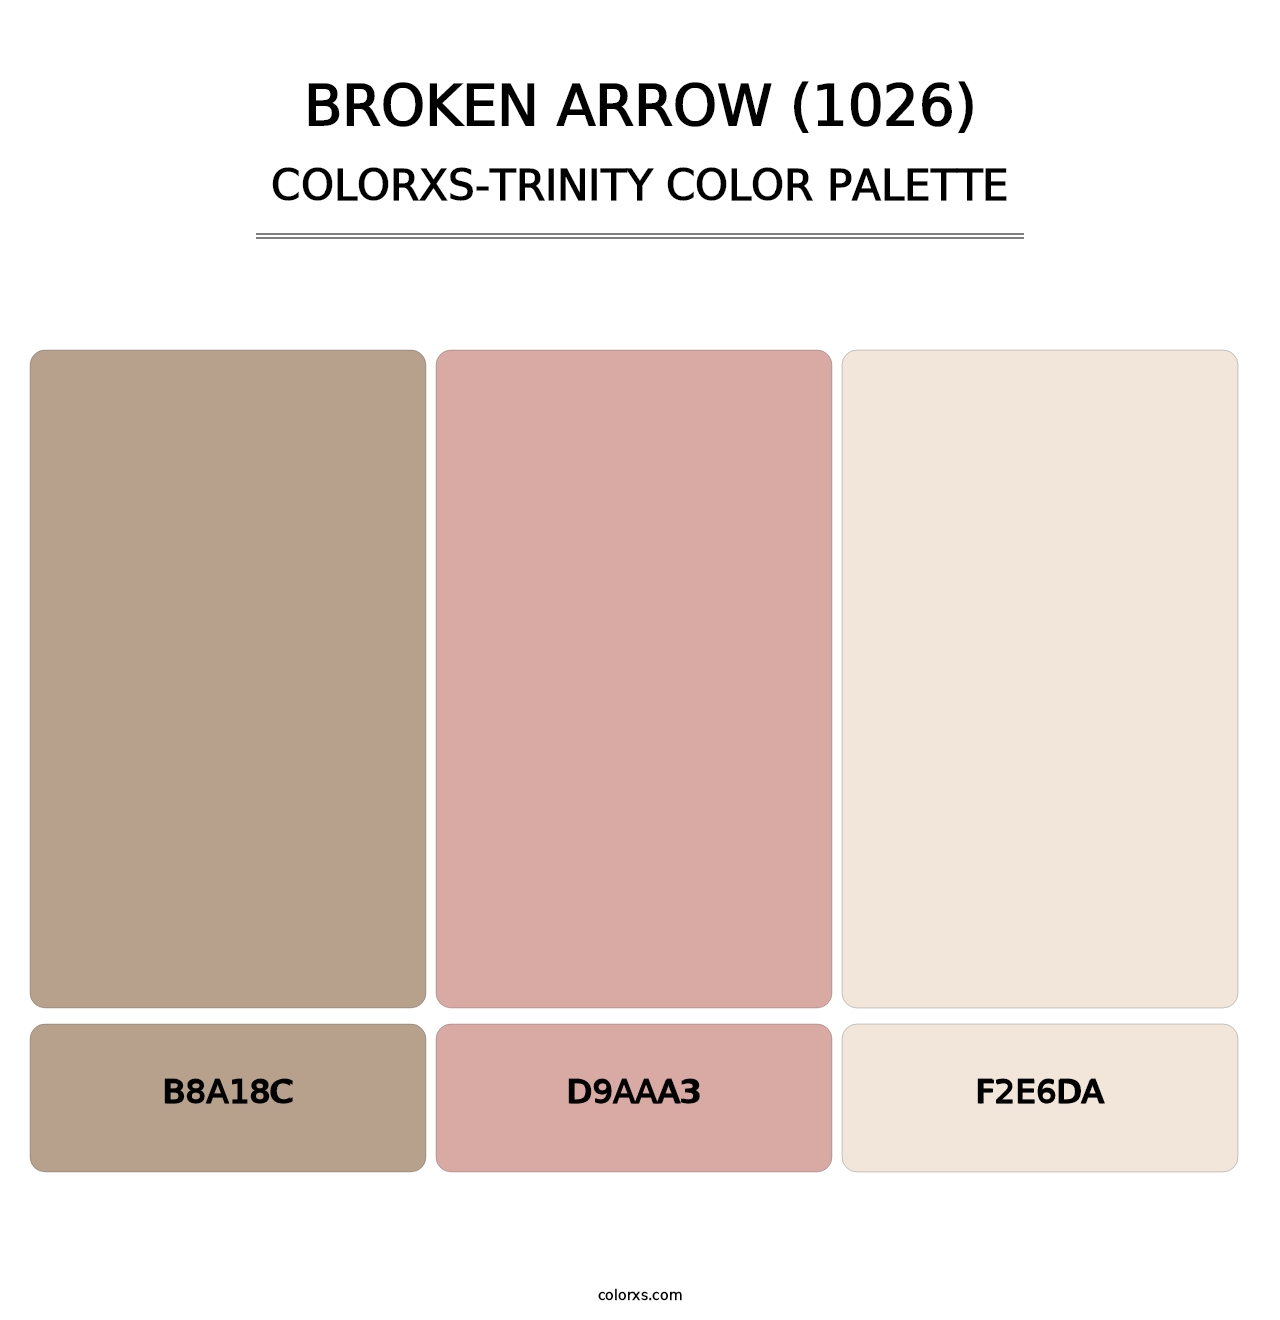 Broken Arrow (1026) - Colorxs Trinity Palette